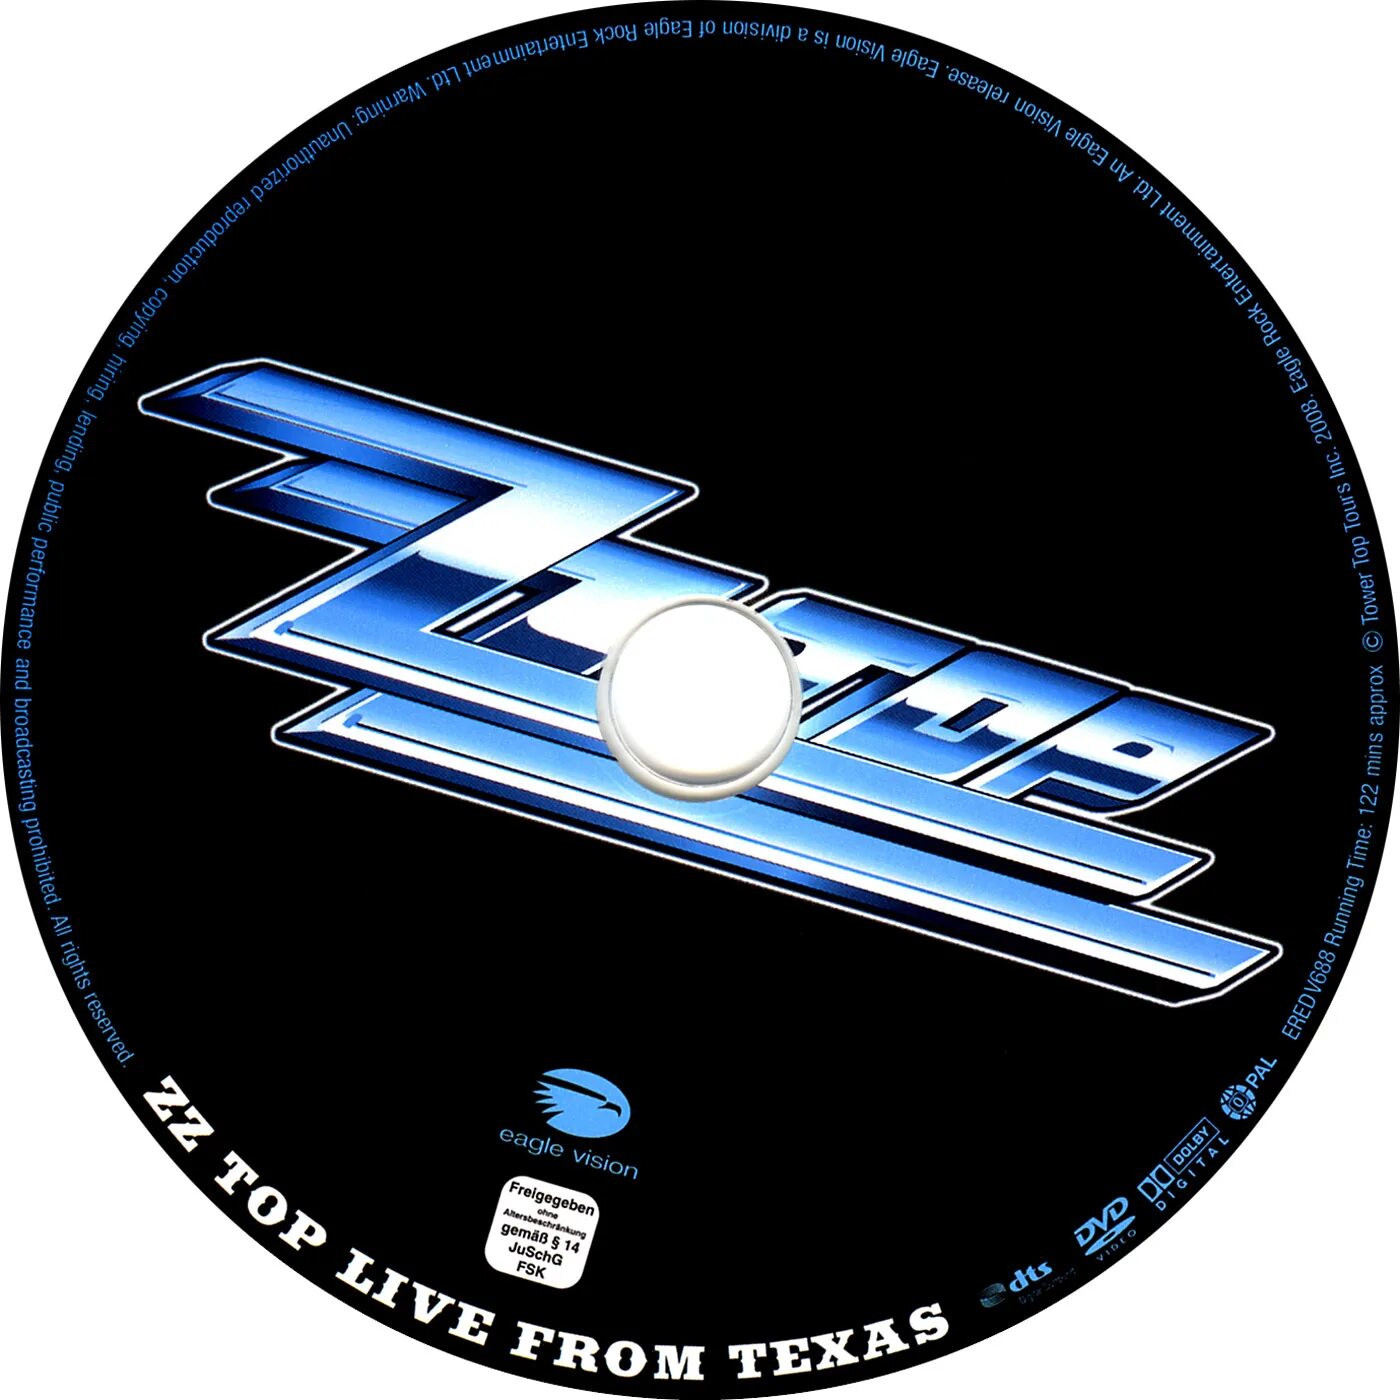 ZZ Top обложка. ZZ Top фотоальбомов. ZZ Top Live from Texas 2008. Наклейка ZZ Top.